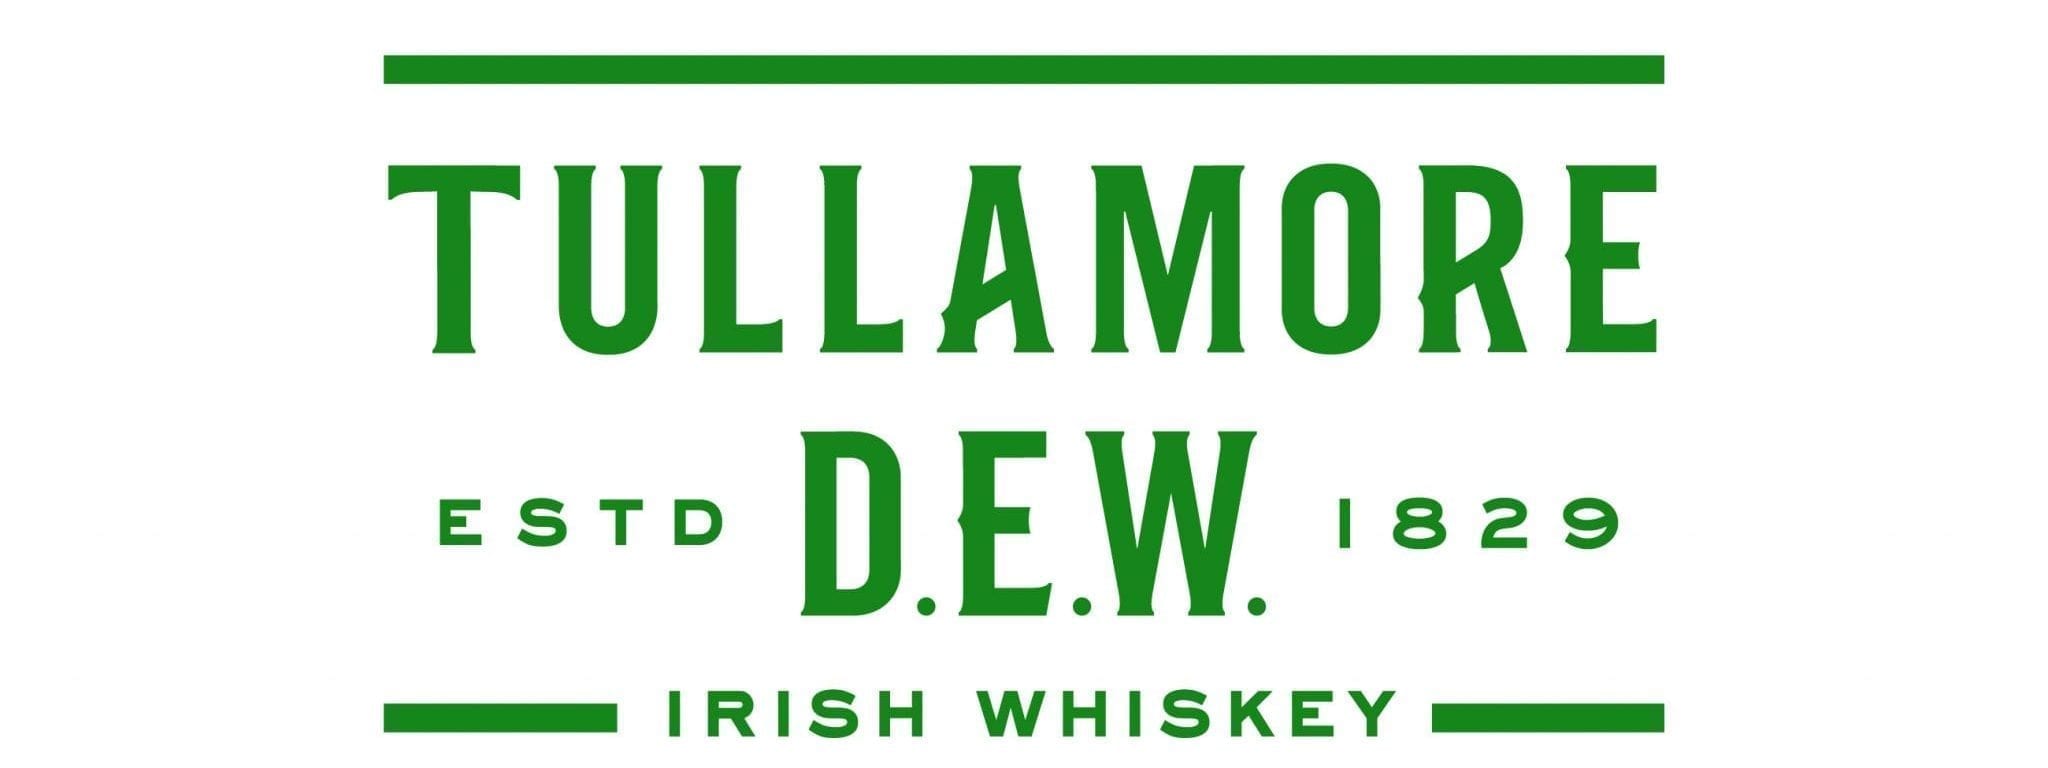 Tullamore Dew Irish Whiskey Blog International Whiskey Reviews by Irish Whiskey Blogger Stuart Mcnamara